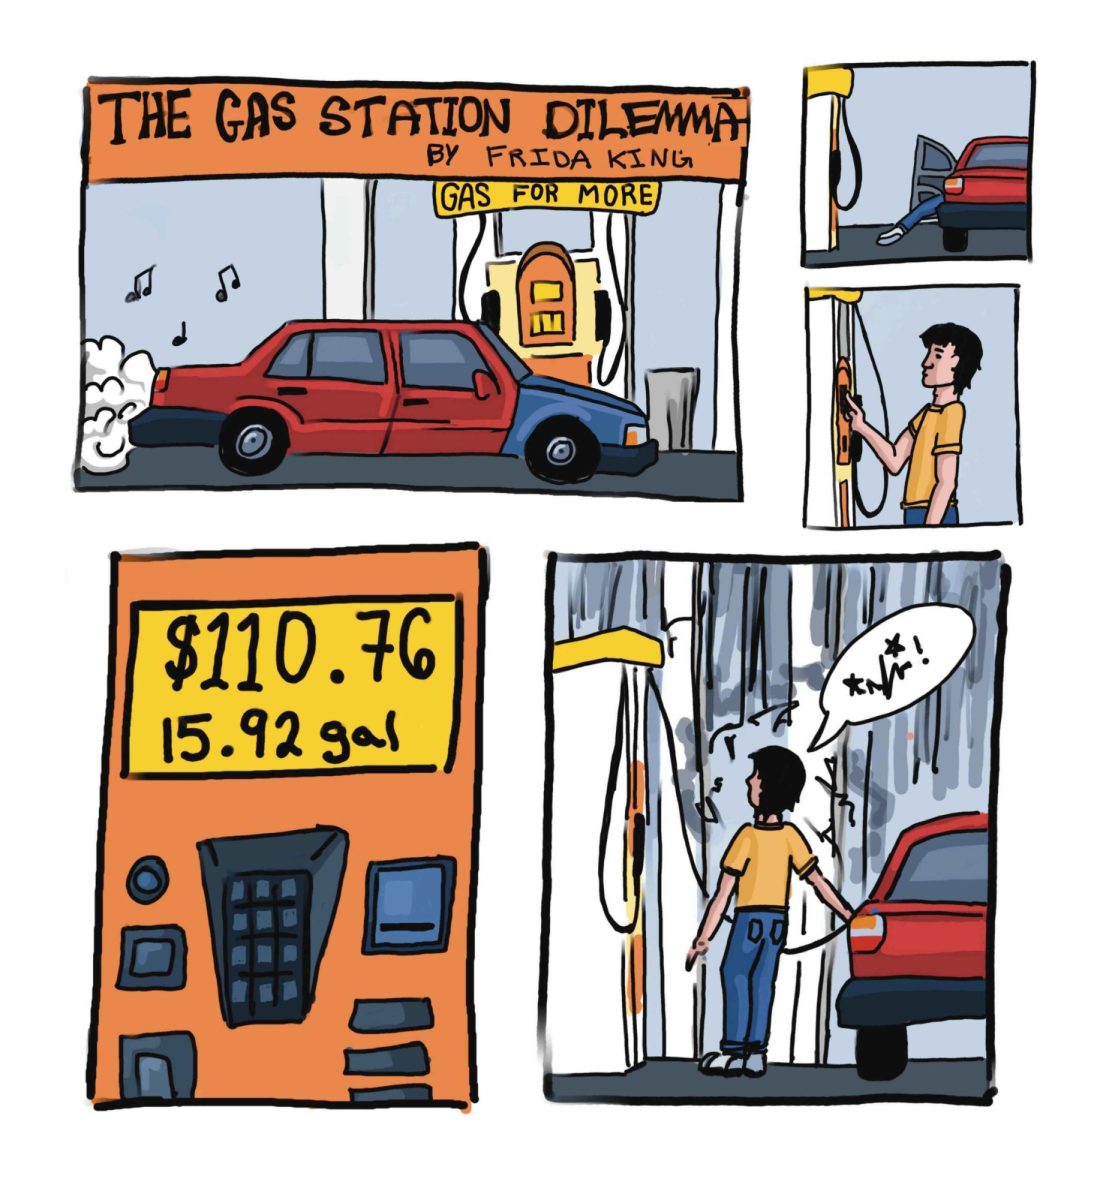 The Gas Station Dilemma